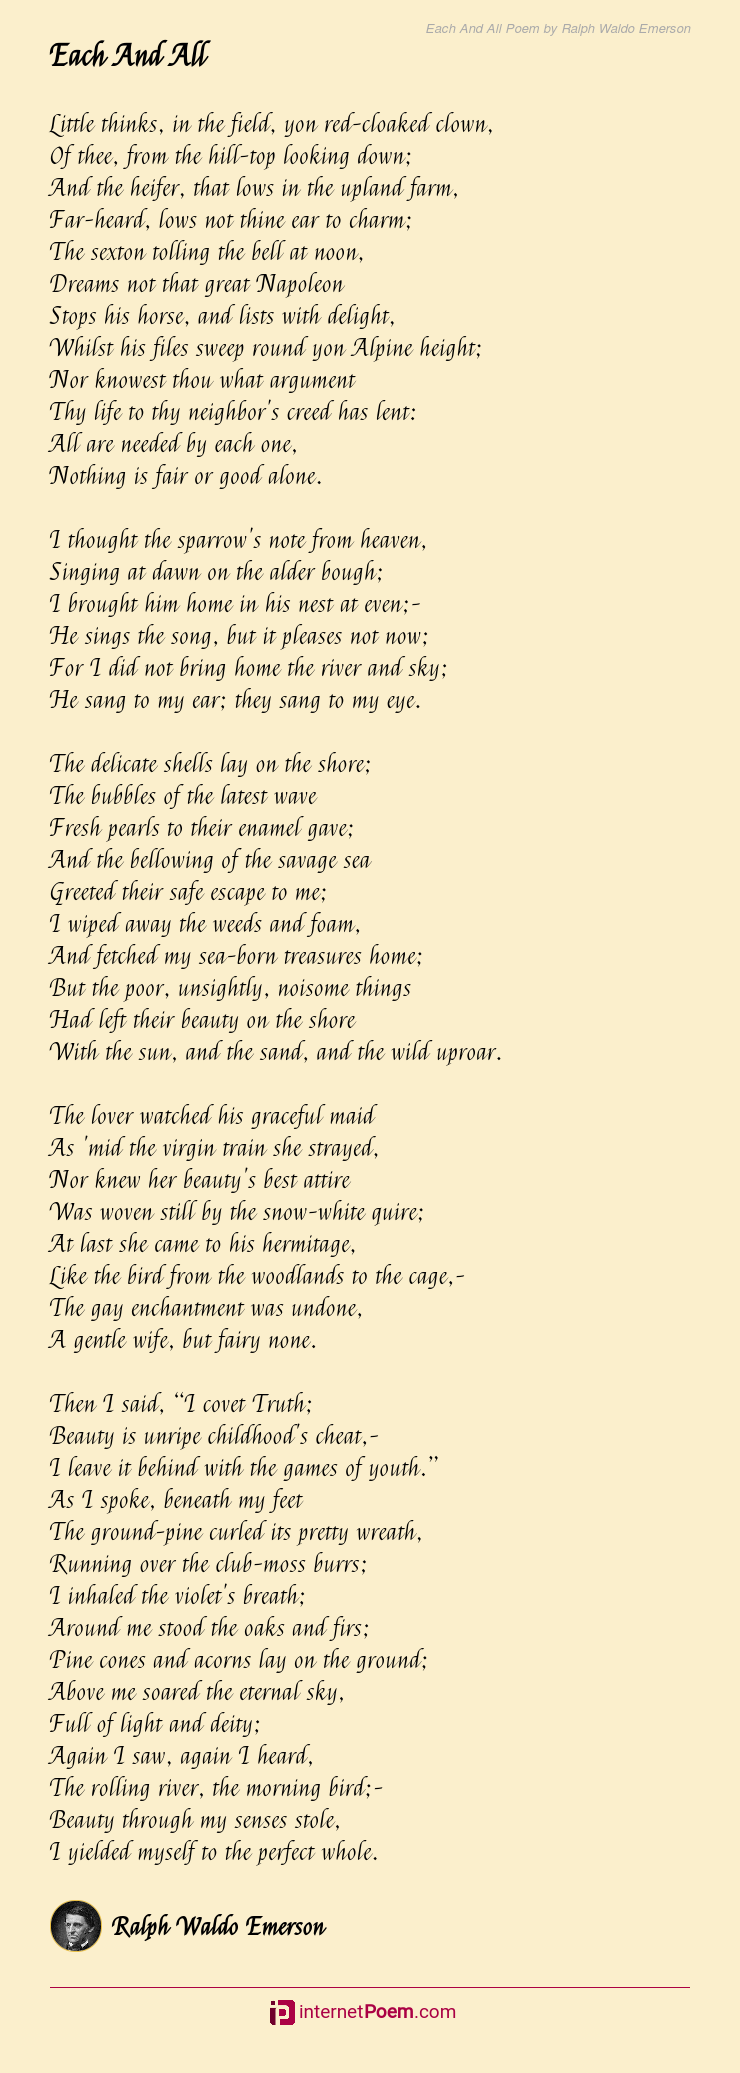 Each And All Poem Rhyme Scheme